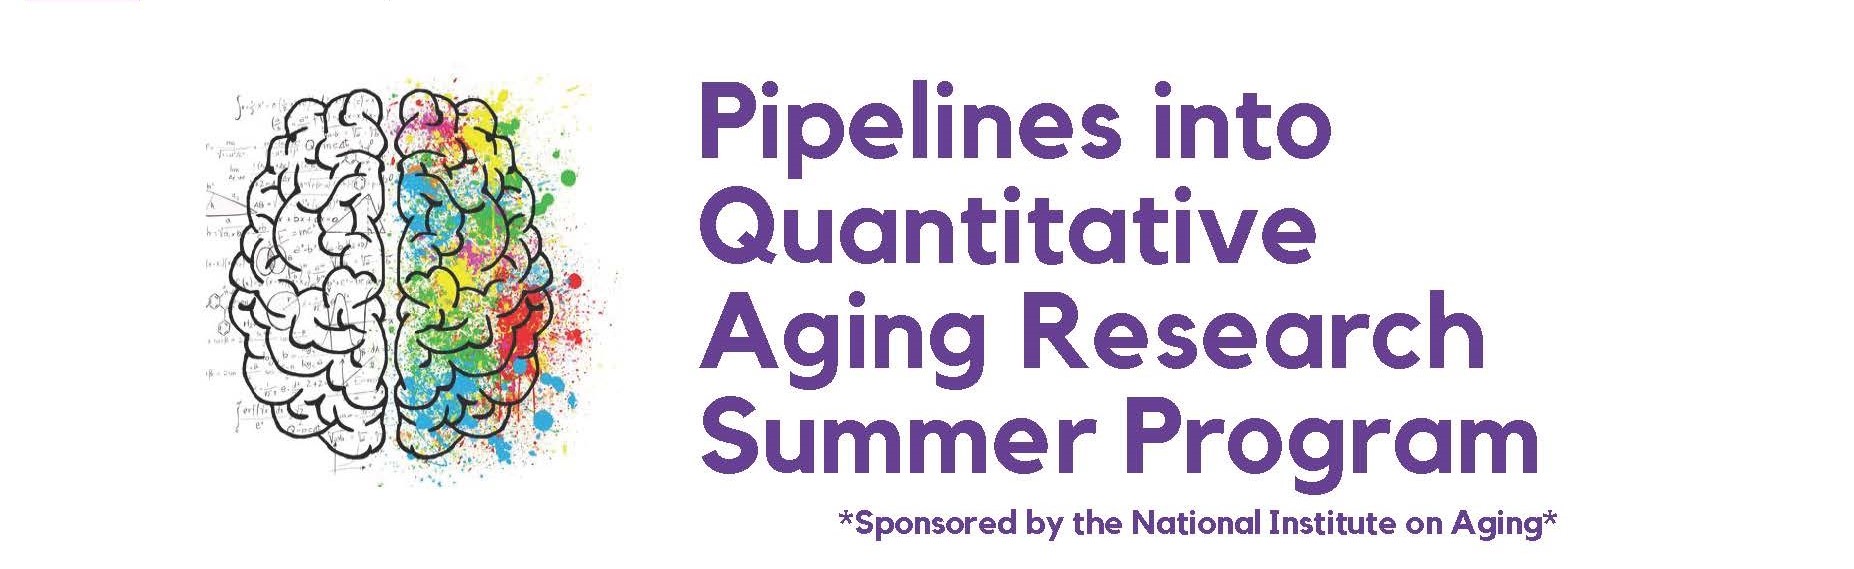 Pipelines into Quantitative Aging Research Summer Program